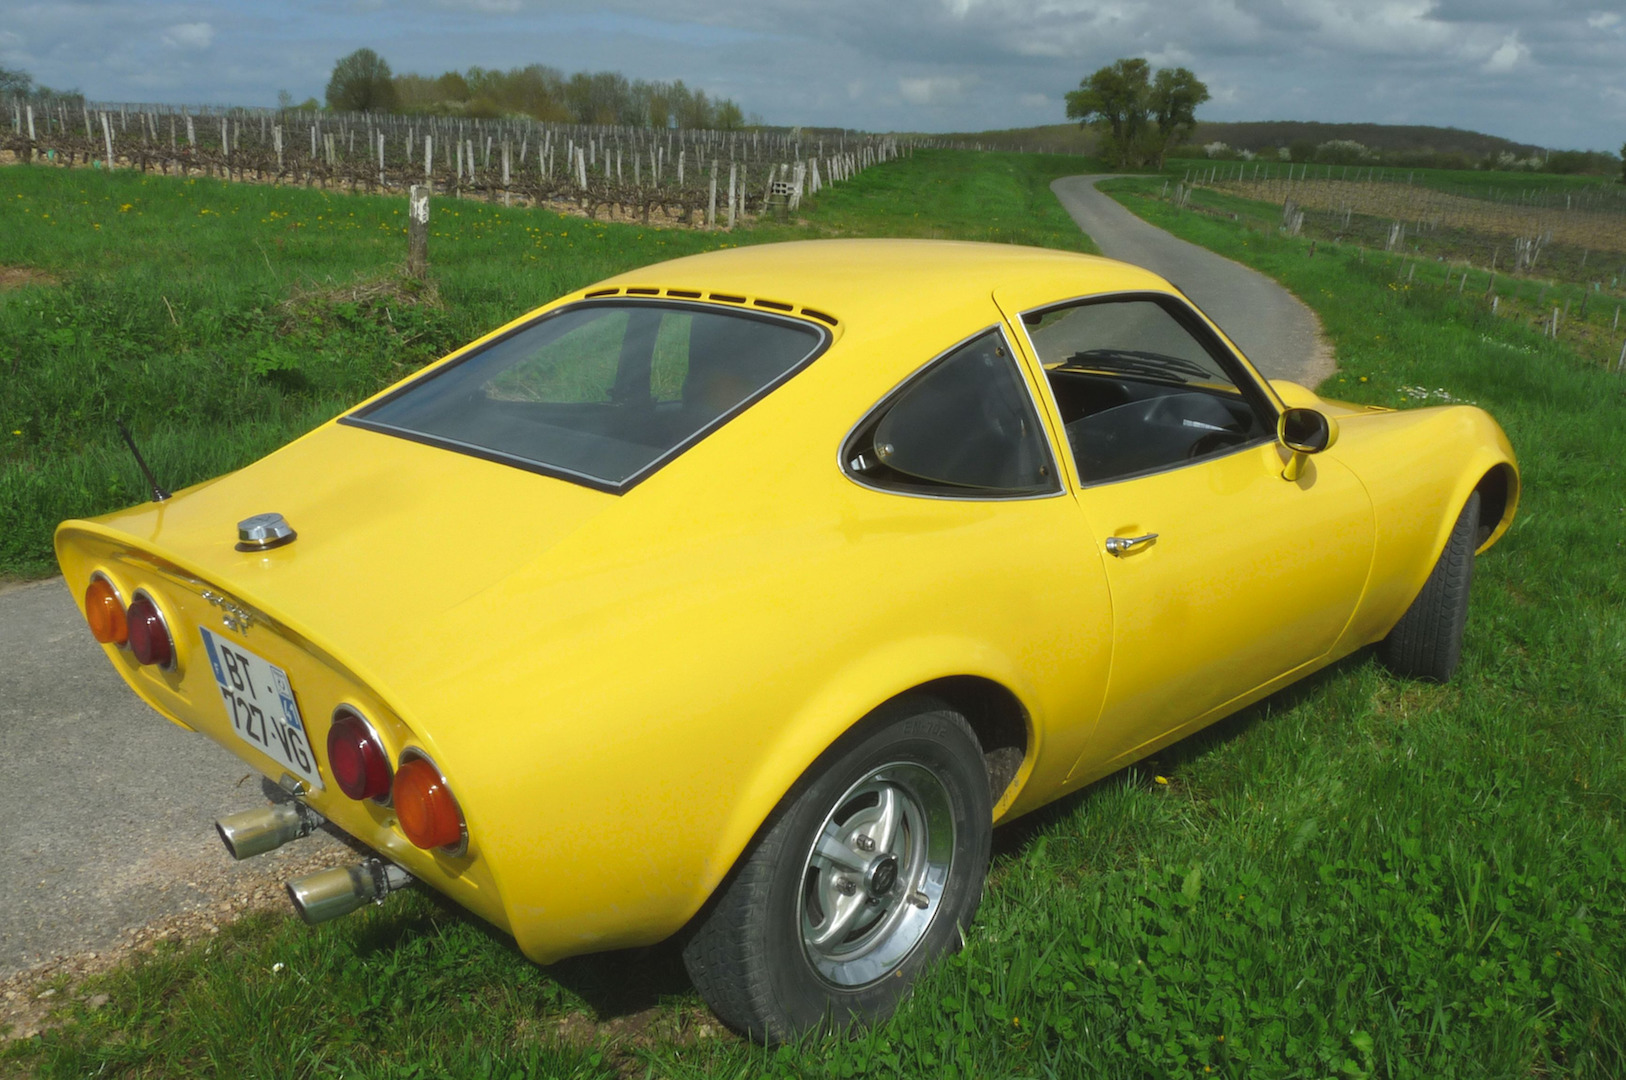 Une Opel GT made in France dans les vins du Loir